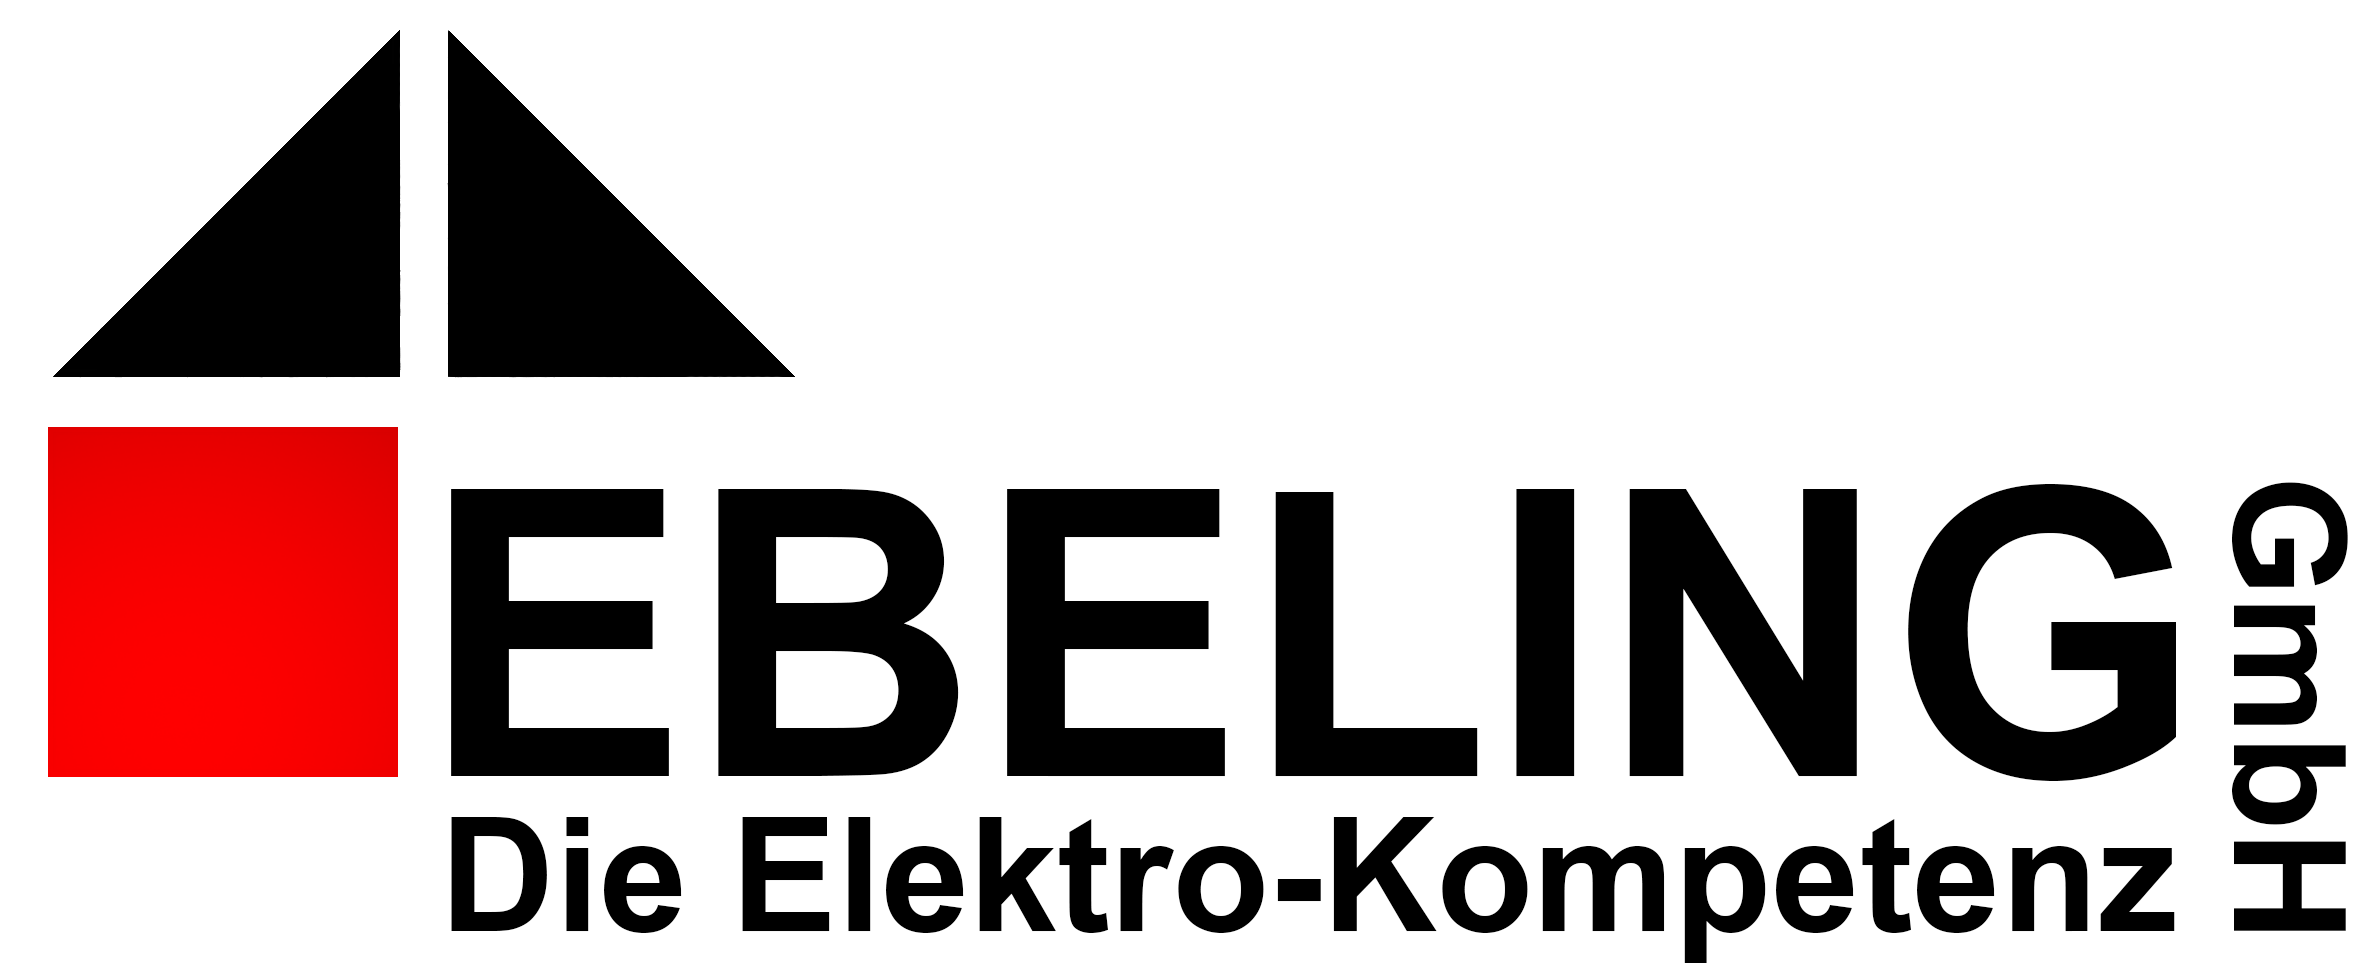 Elektro Ebeling GmbH - Die Elektro-Kompetenz